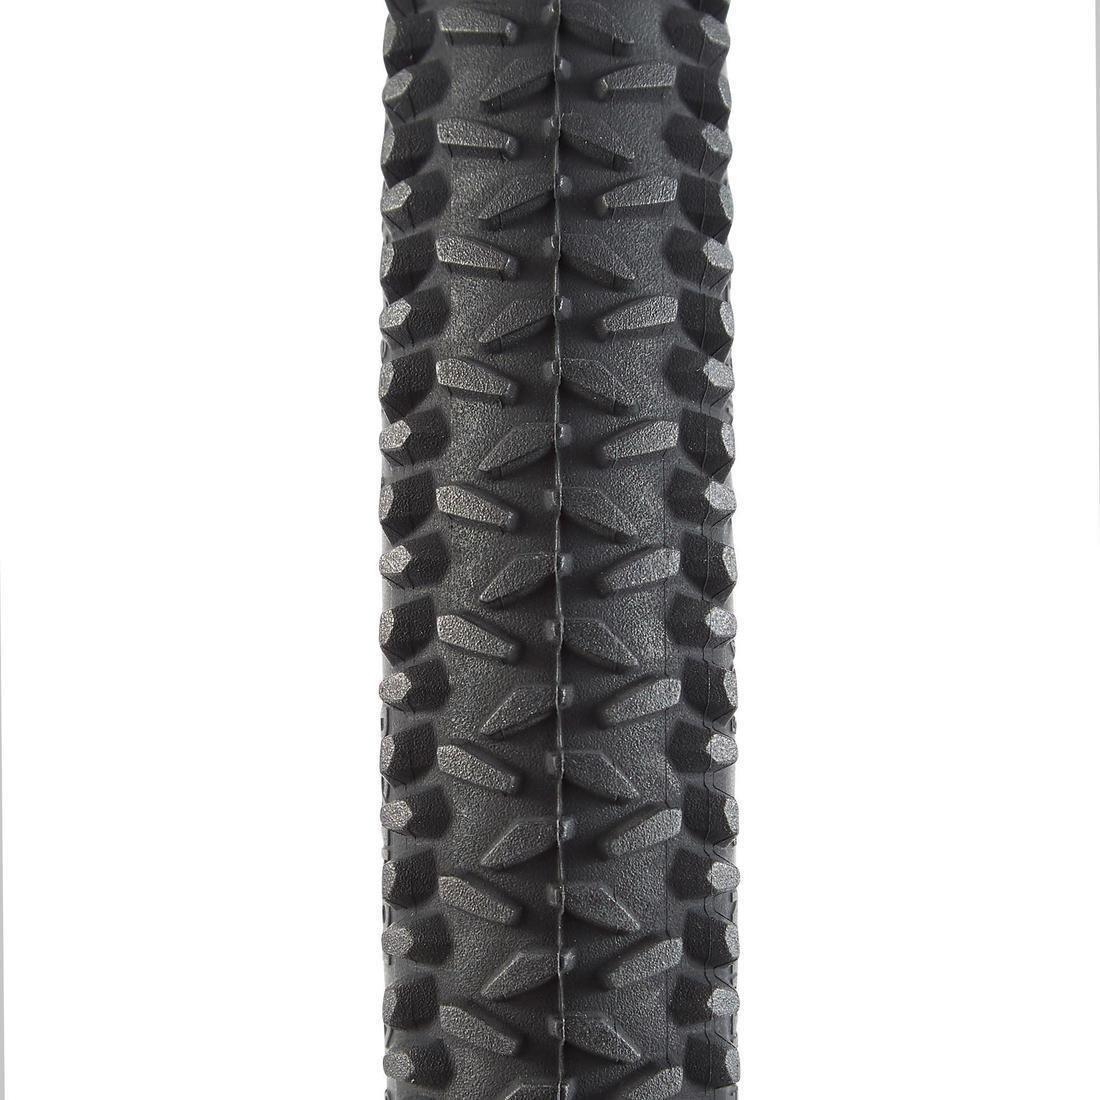 BTWIN - Discover Kids' Bike Tyre, Black